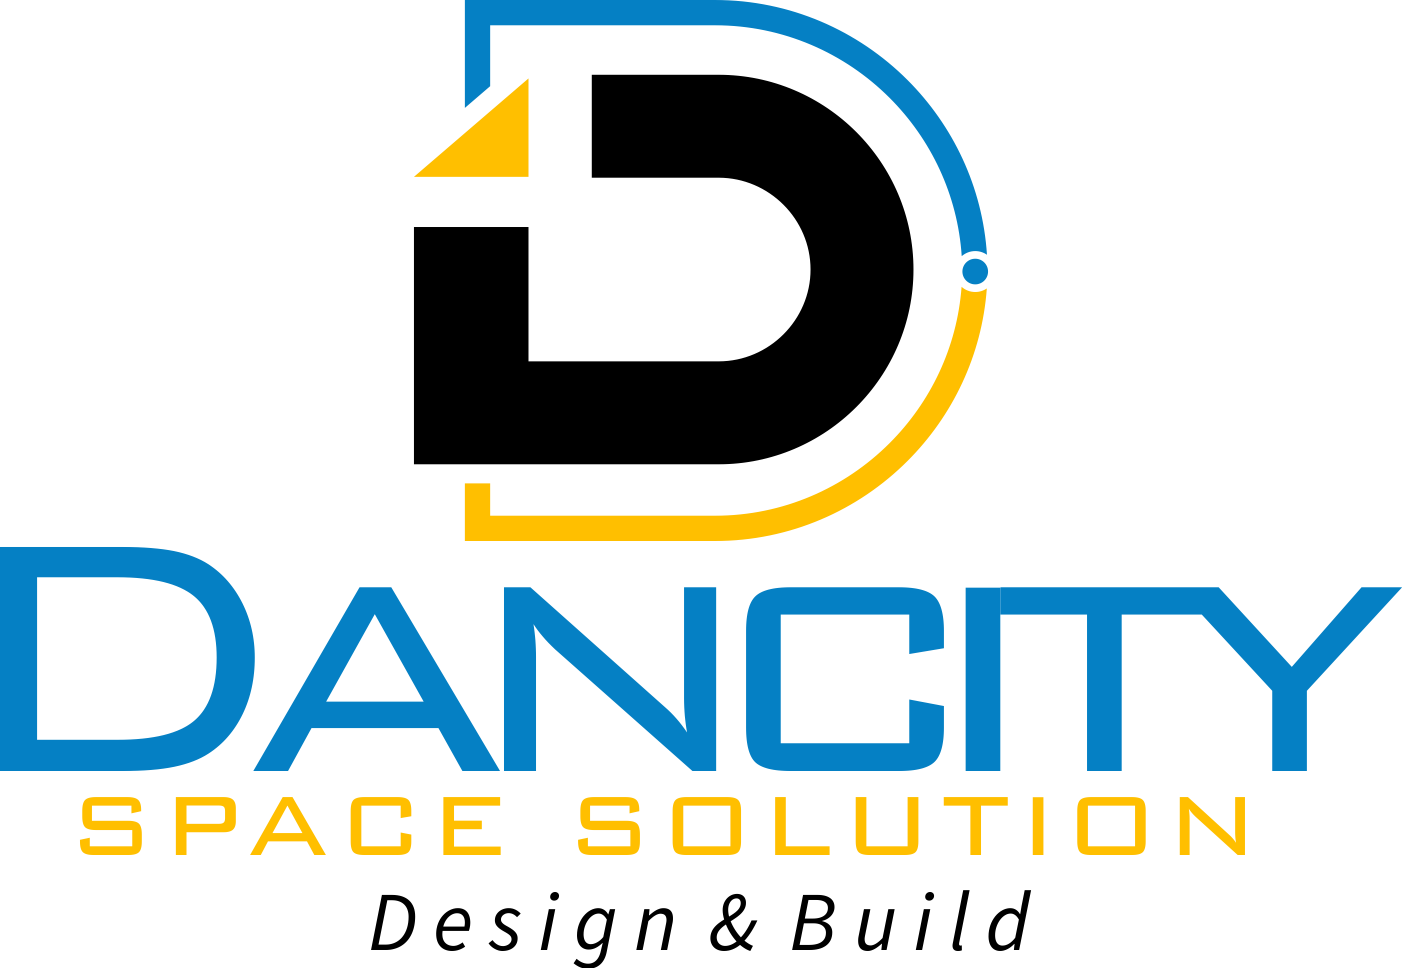 Dancity Space Solution